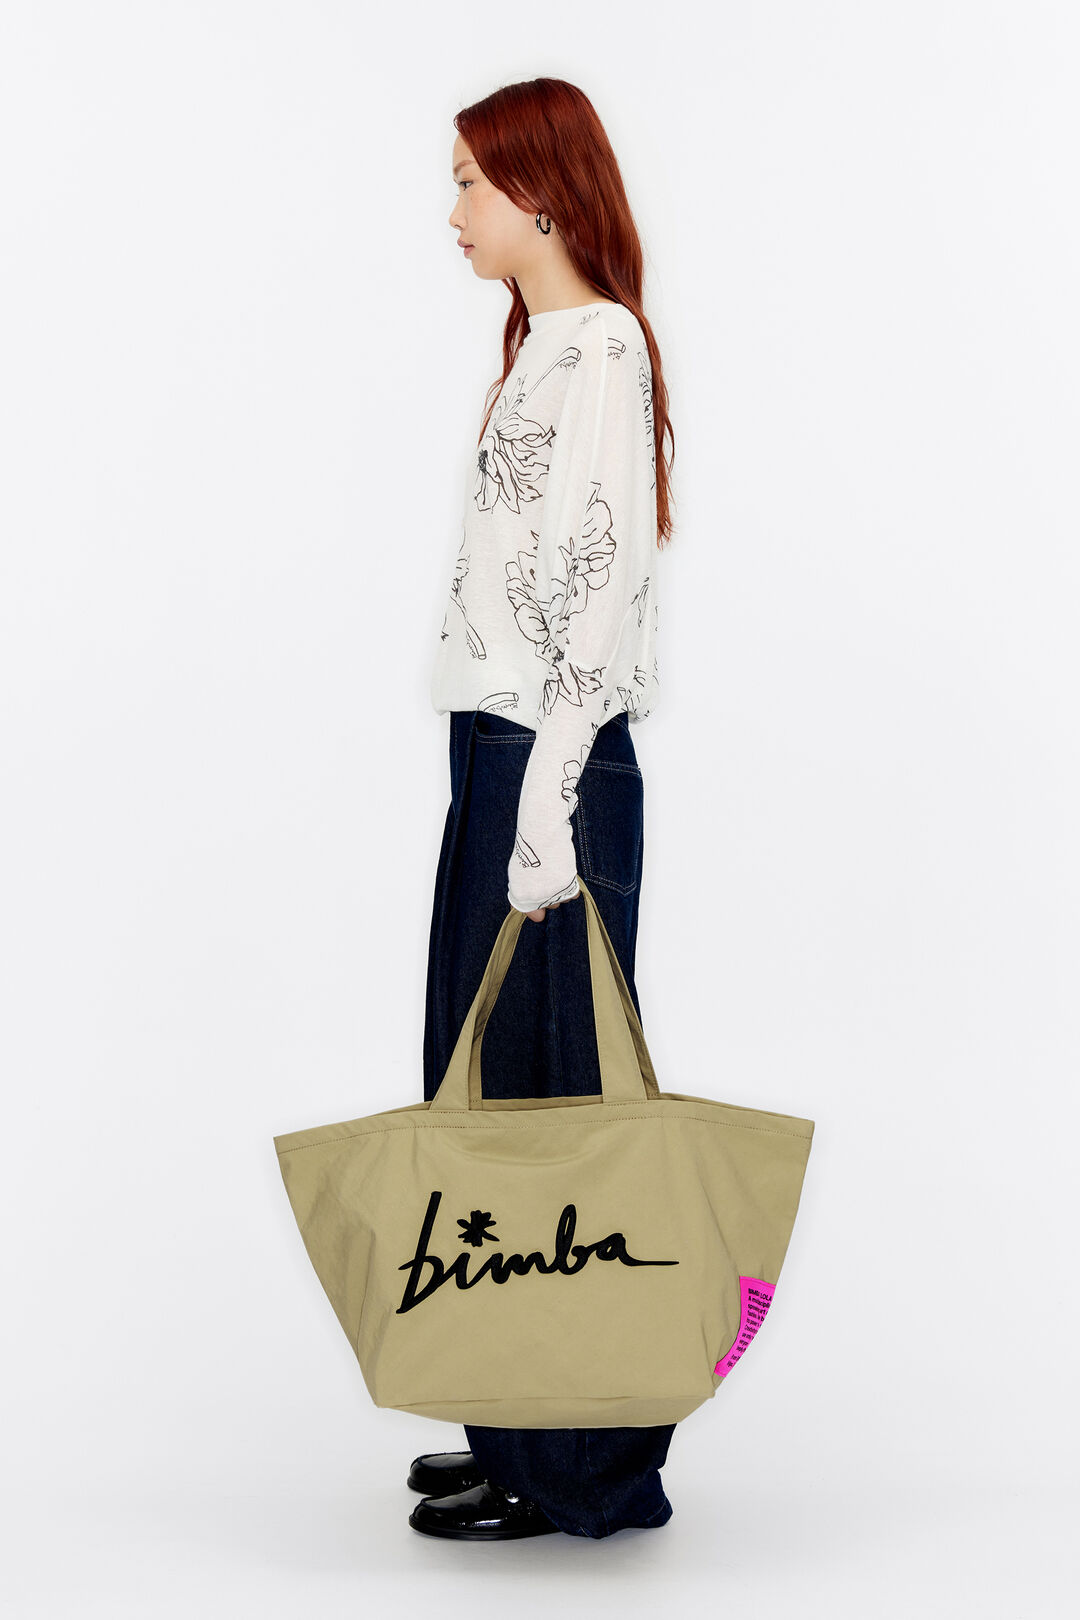 BIMBA Y LOLA HANDBAG 100% ORIGINAL, Women's Fashion, Bags